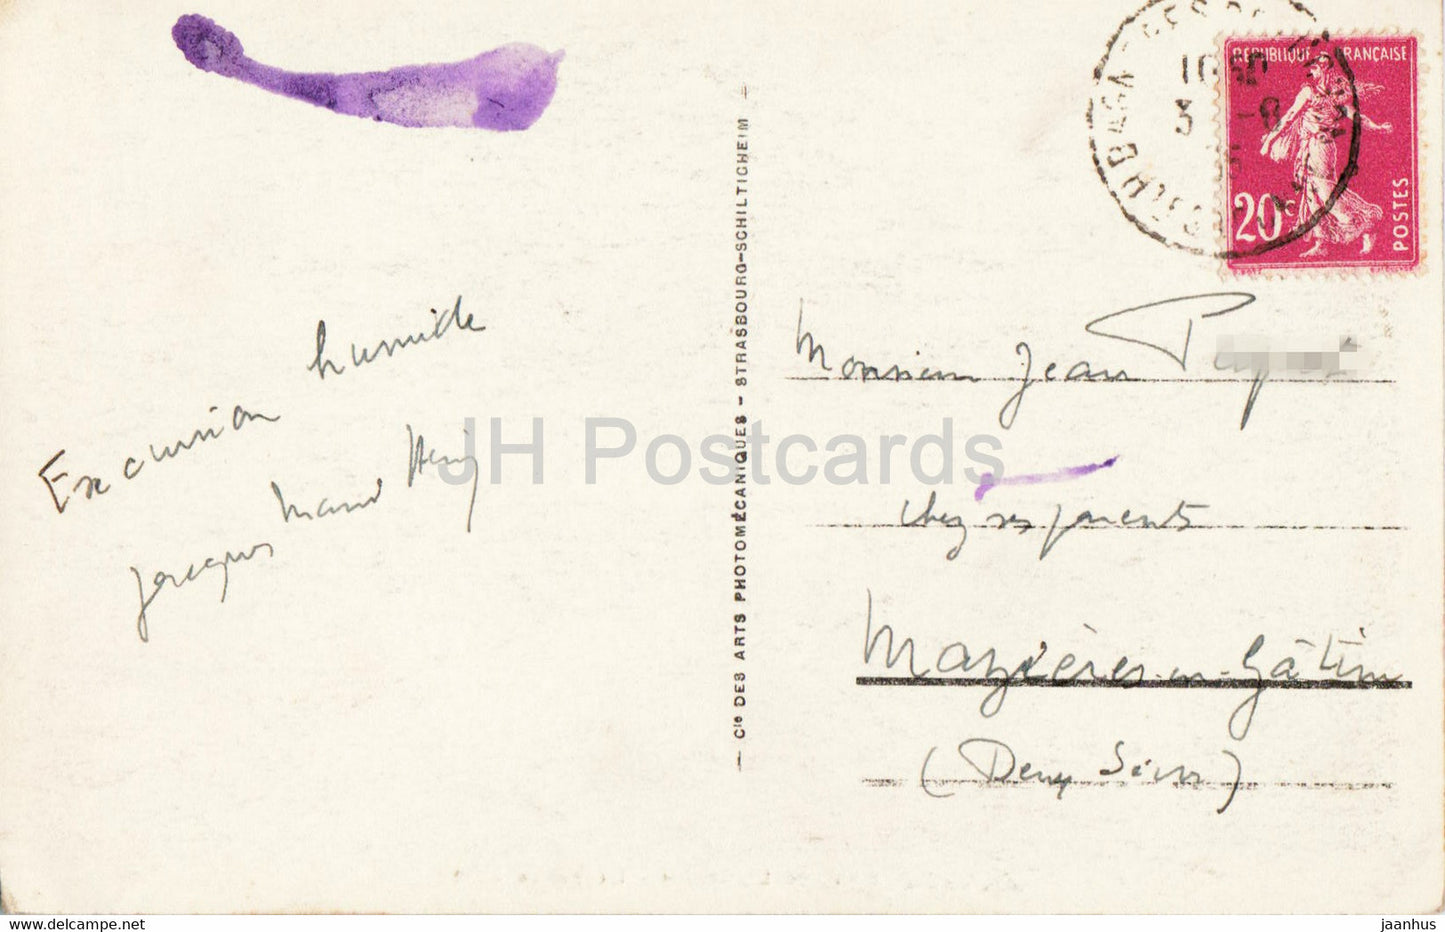 Env de Luchon - La Vallee d'Oo - 112 - alte Postkarte - 1935 - Frankreich - gebraucht